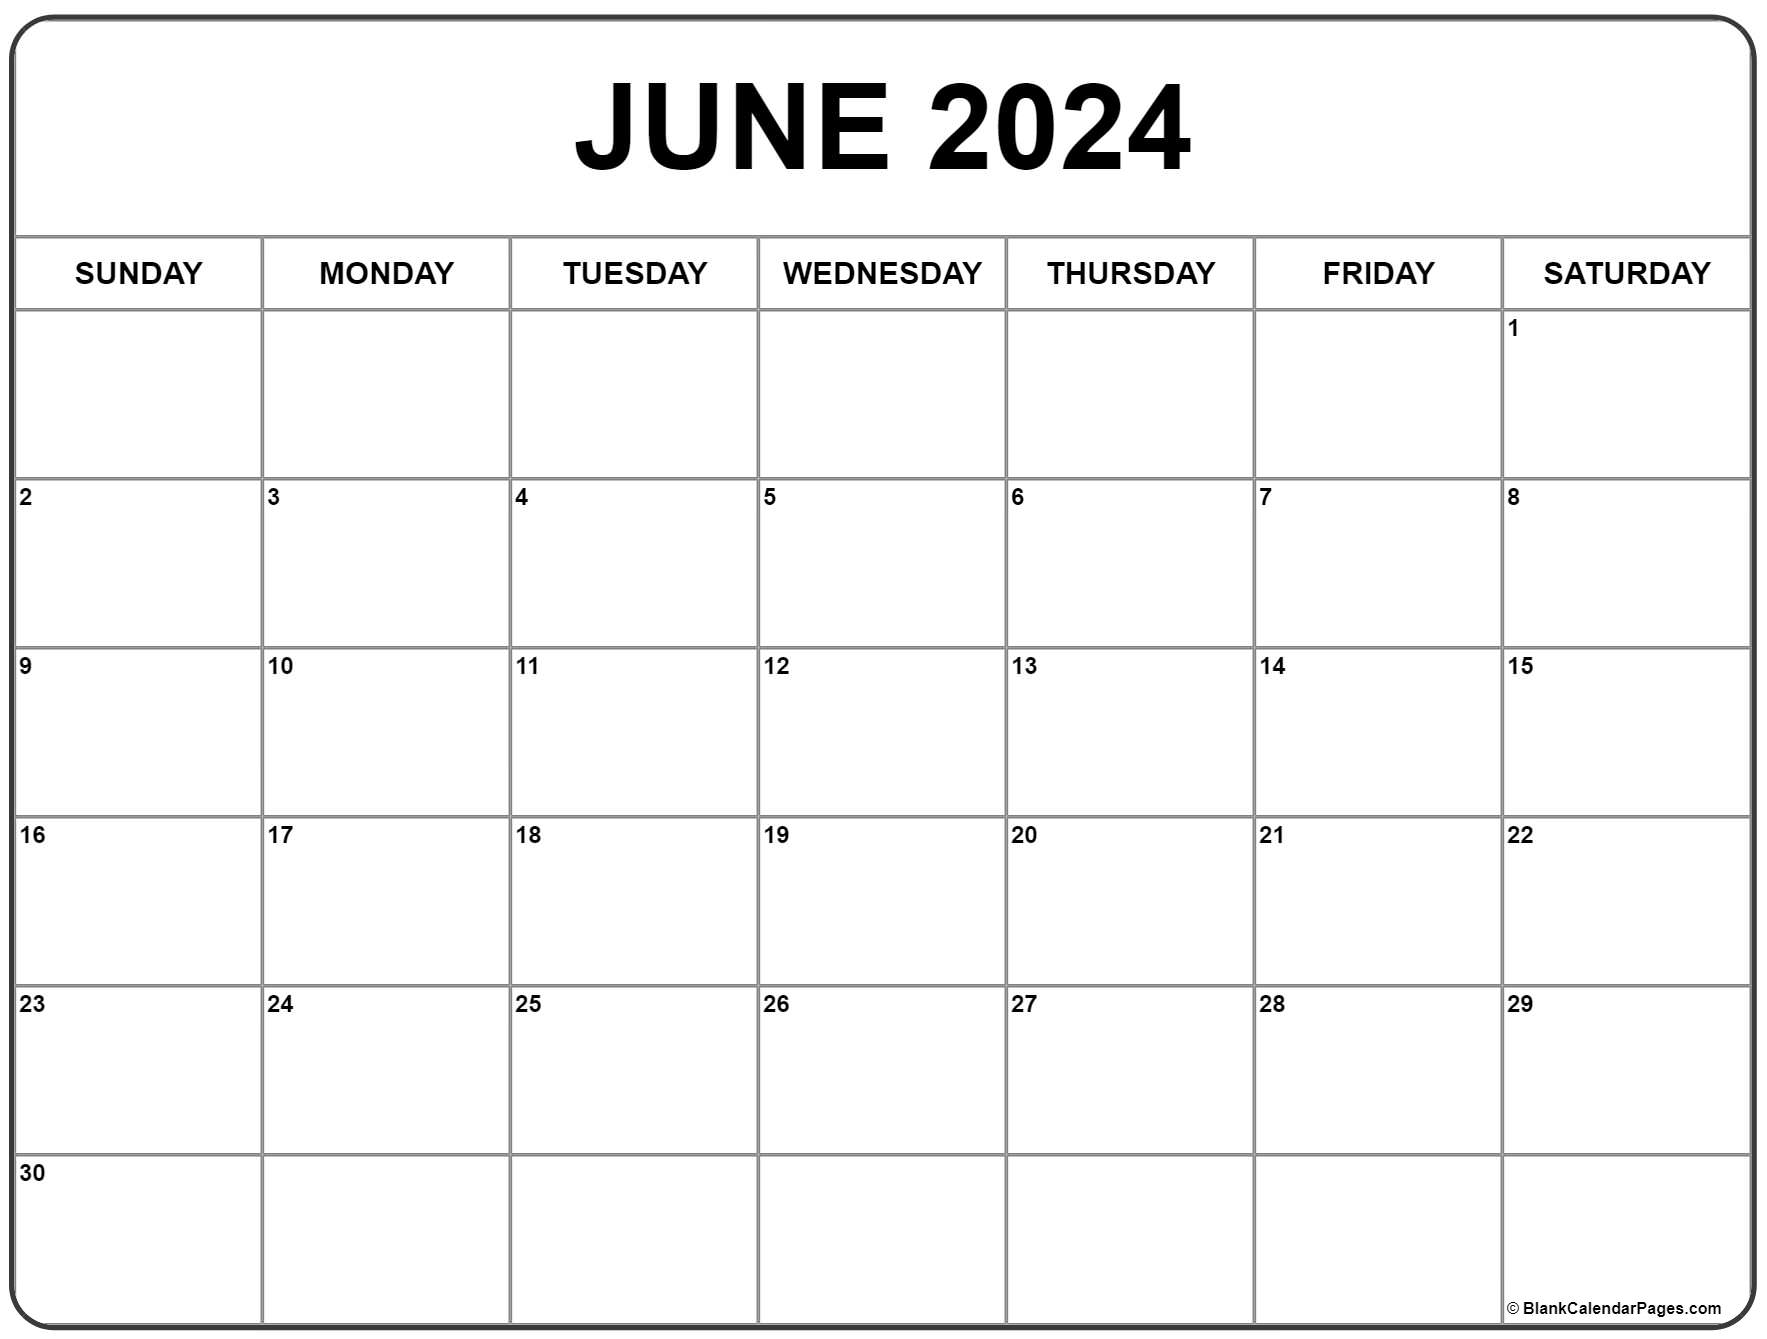 June 2024 Calendar | Free Printable Calendar for Printable Free Calendar June 2024